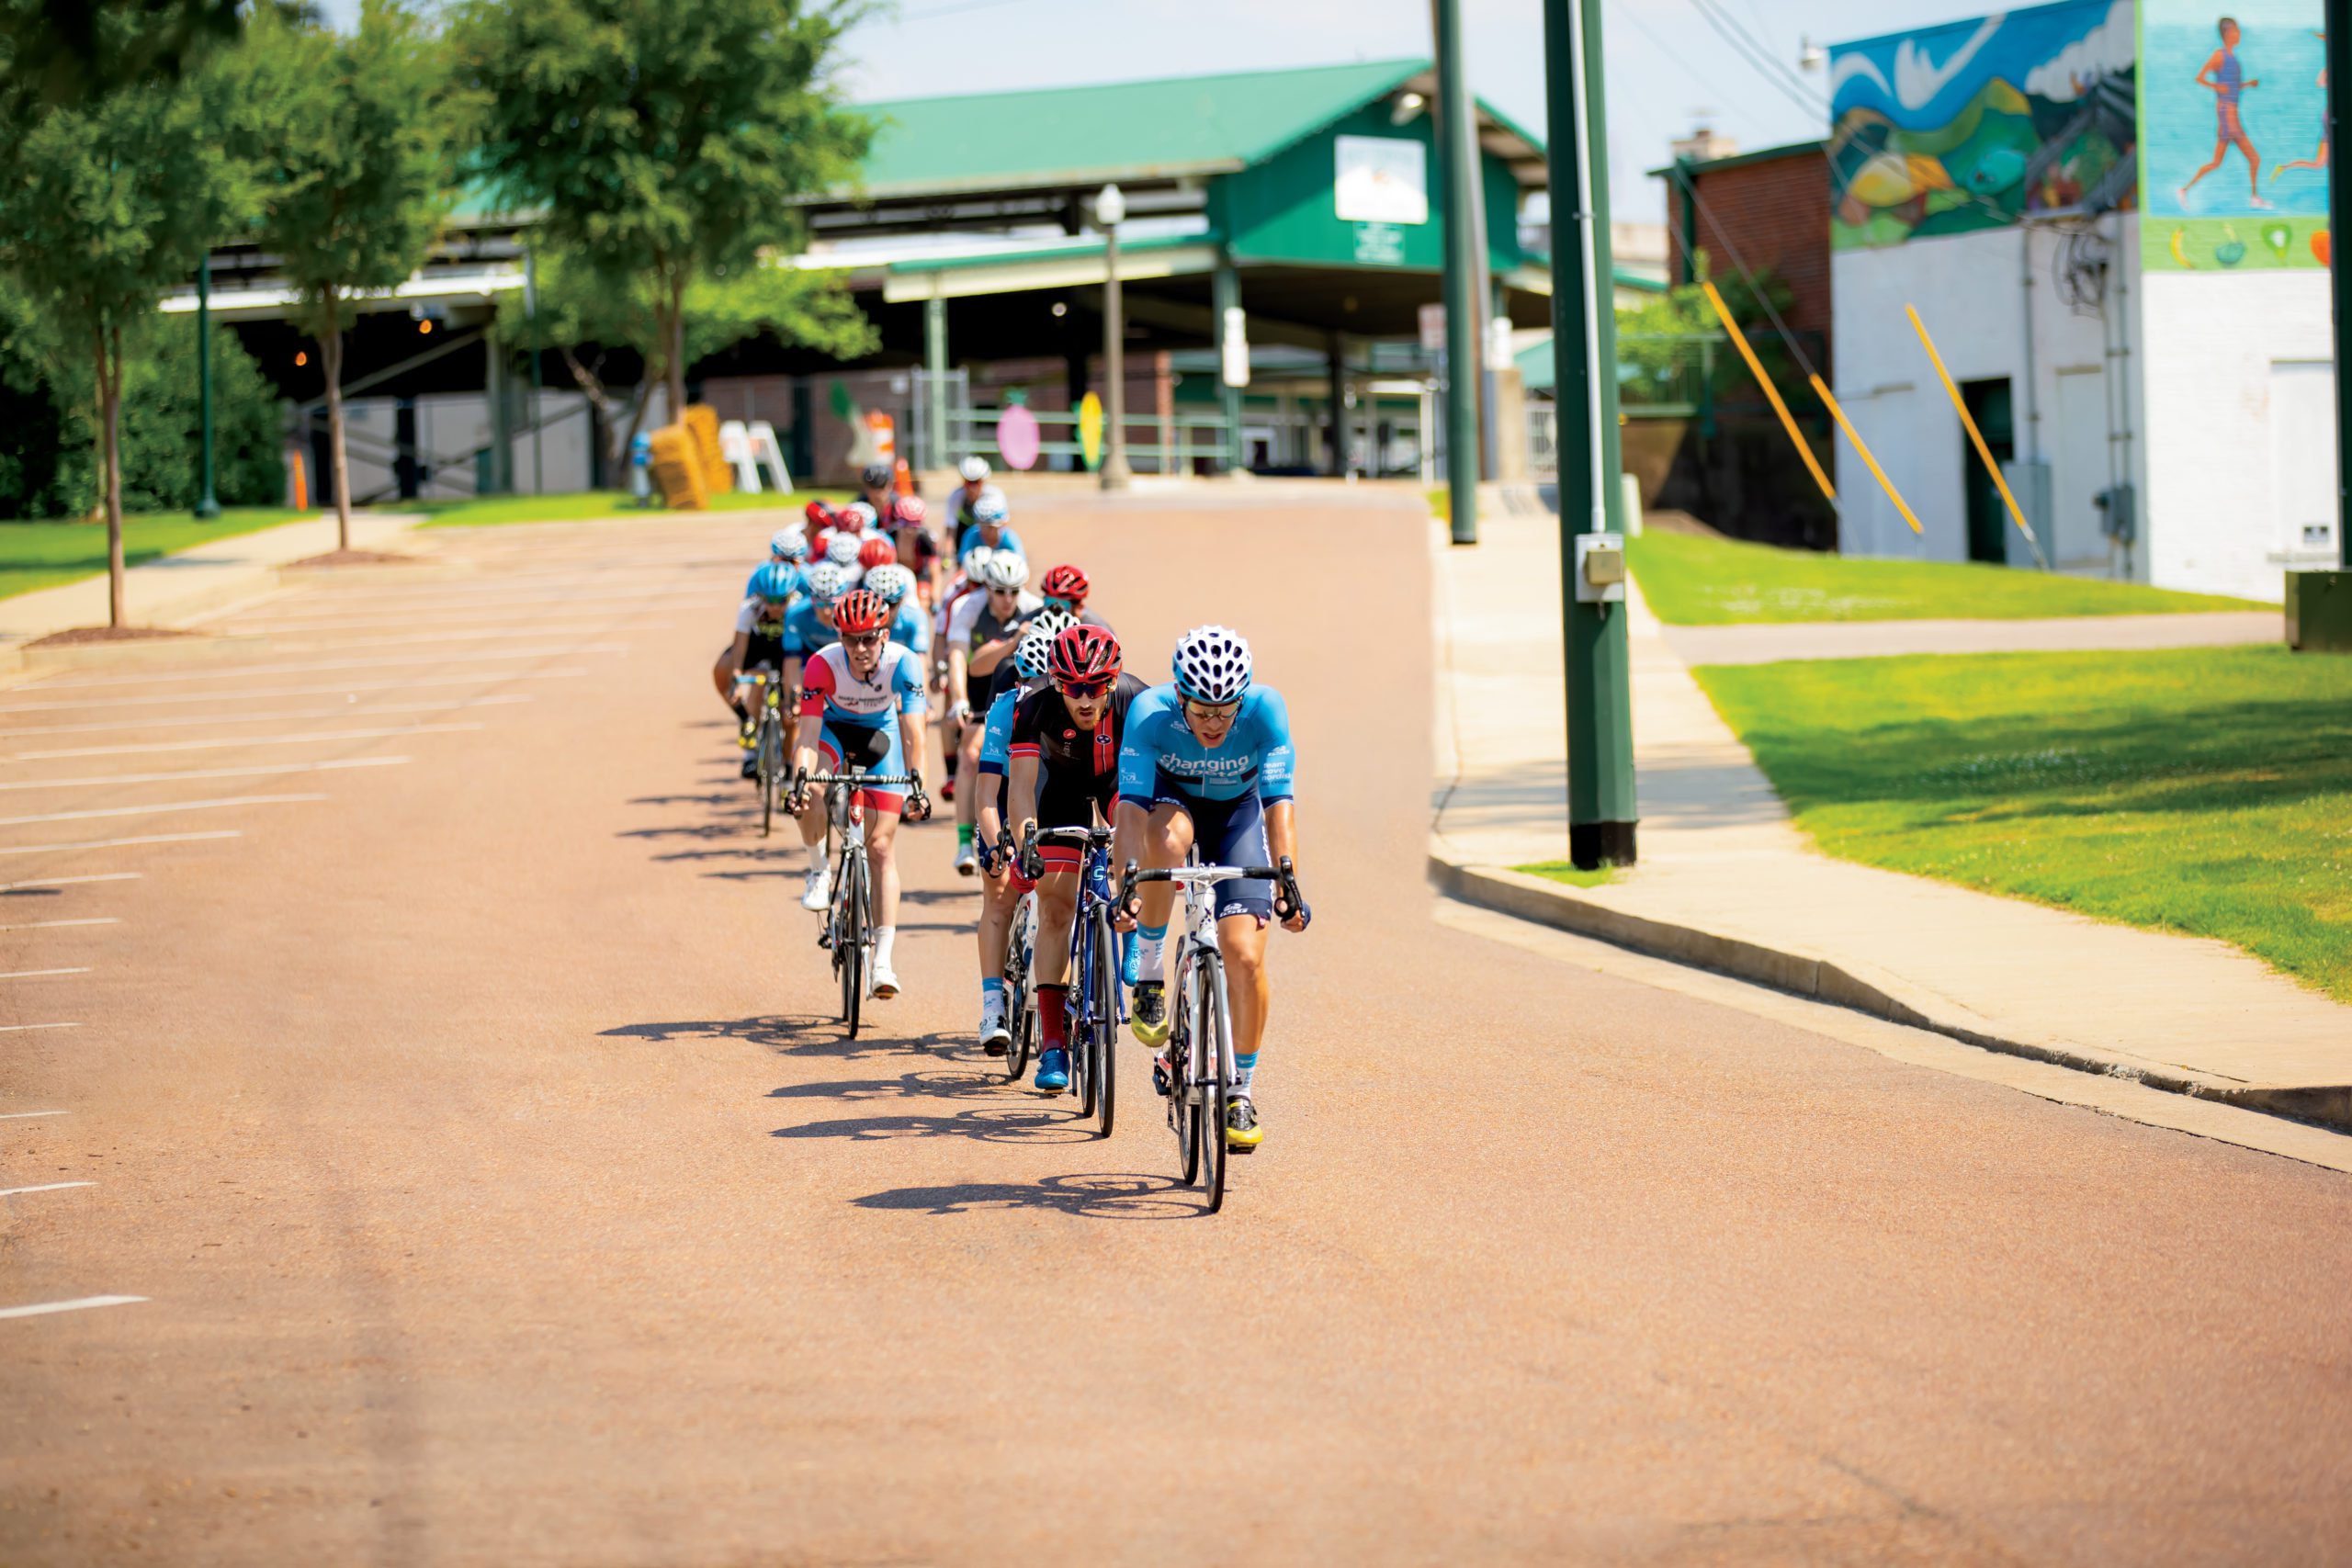 Rockabilly Gran Prix Criterium Race, Jackson Walk, Jackson TN. and Zagster bike share program kickoff 
©Journal Communications/Steve Jones